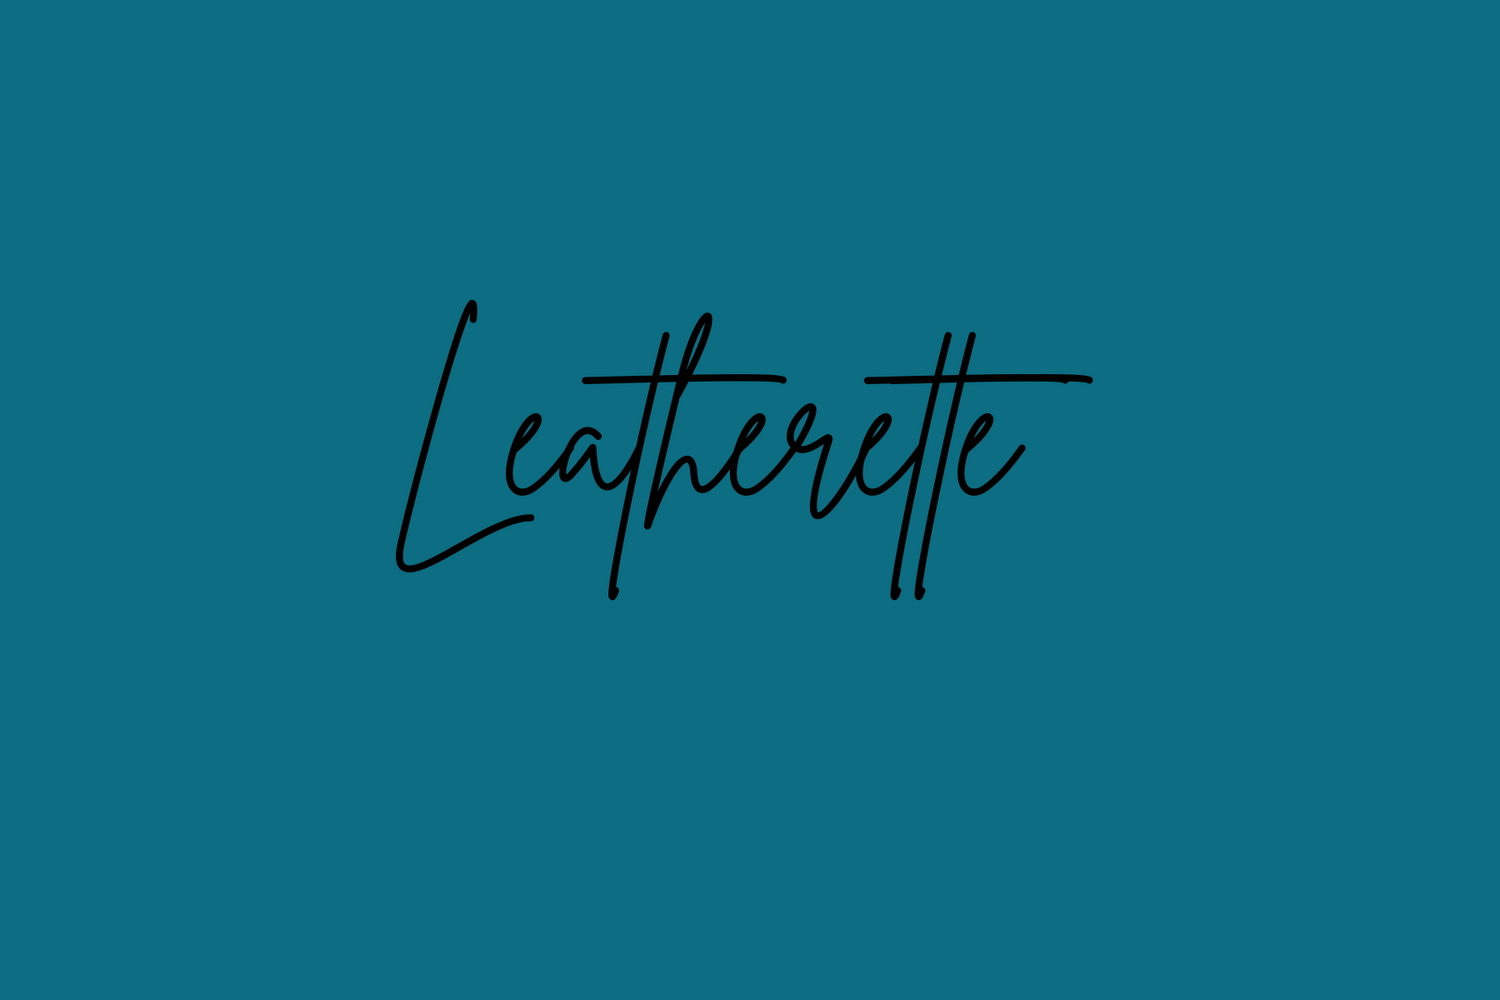 Leatherette Items